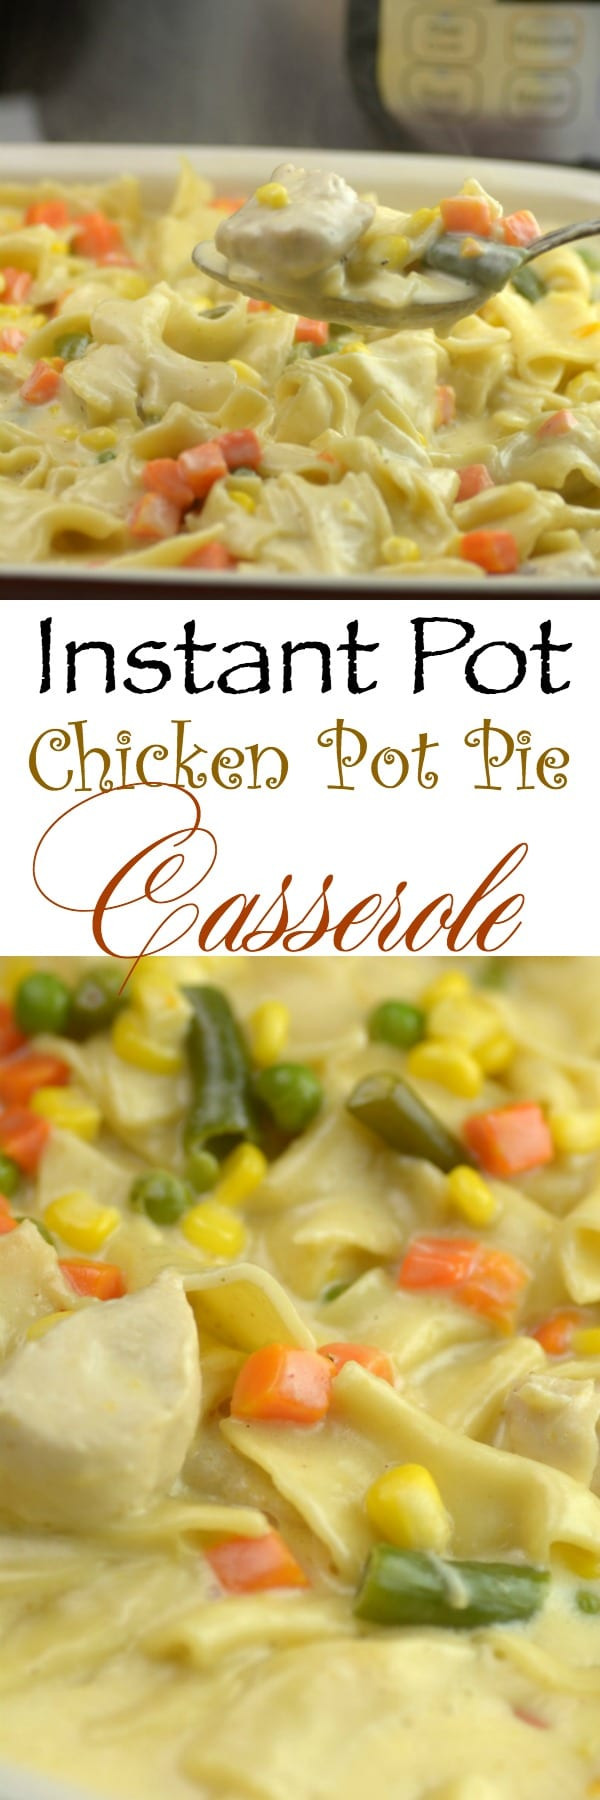 Chicken Pot Pie Soup Instant Pot
 Instant Pot Chicken PotPie Casserole